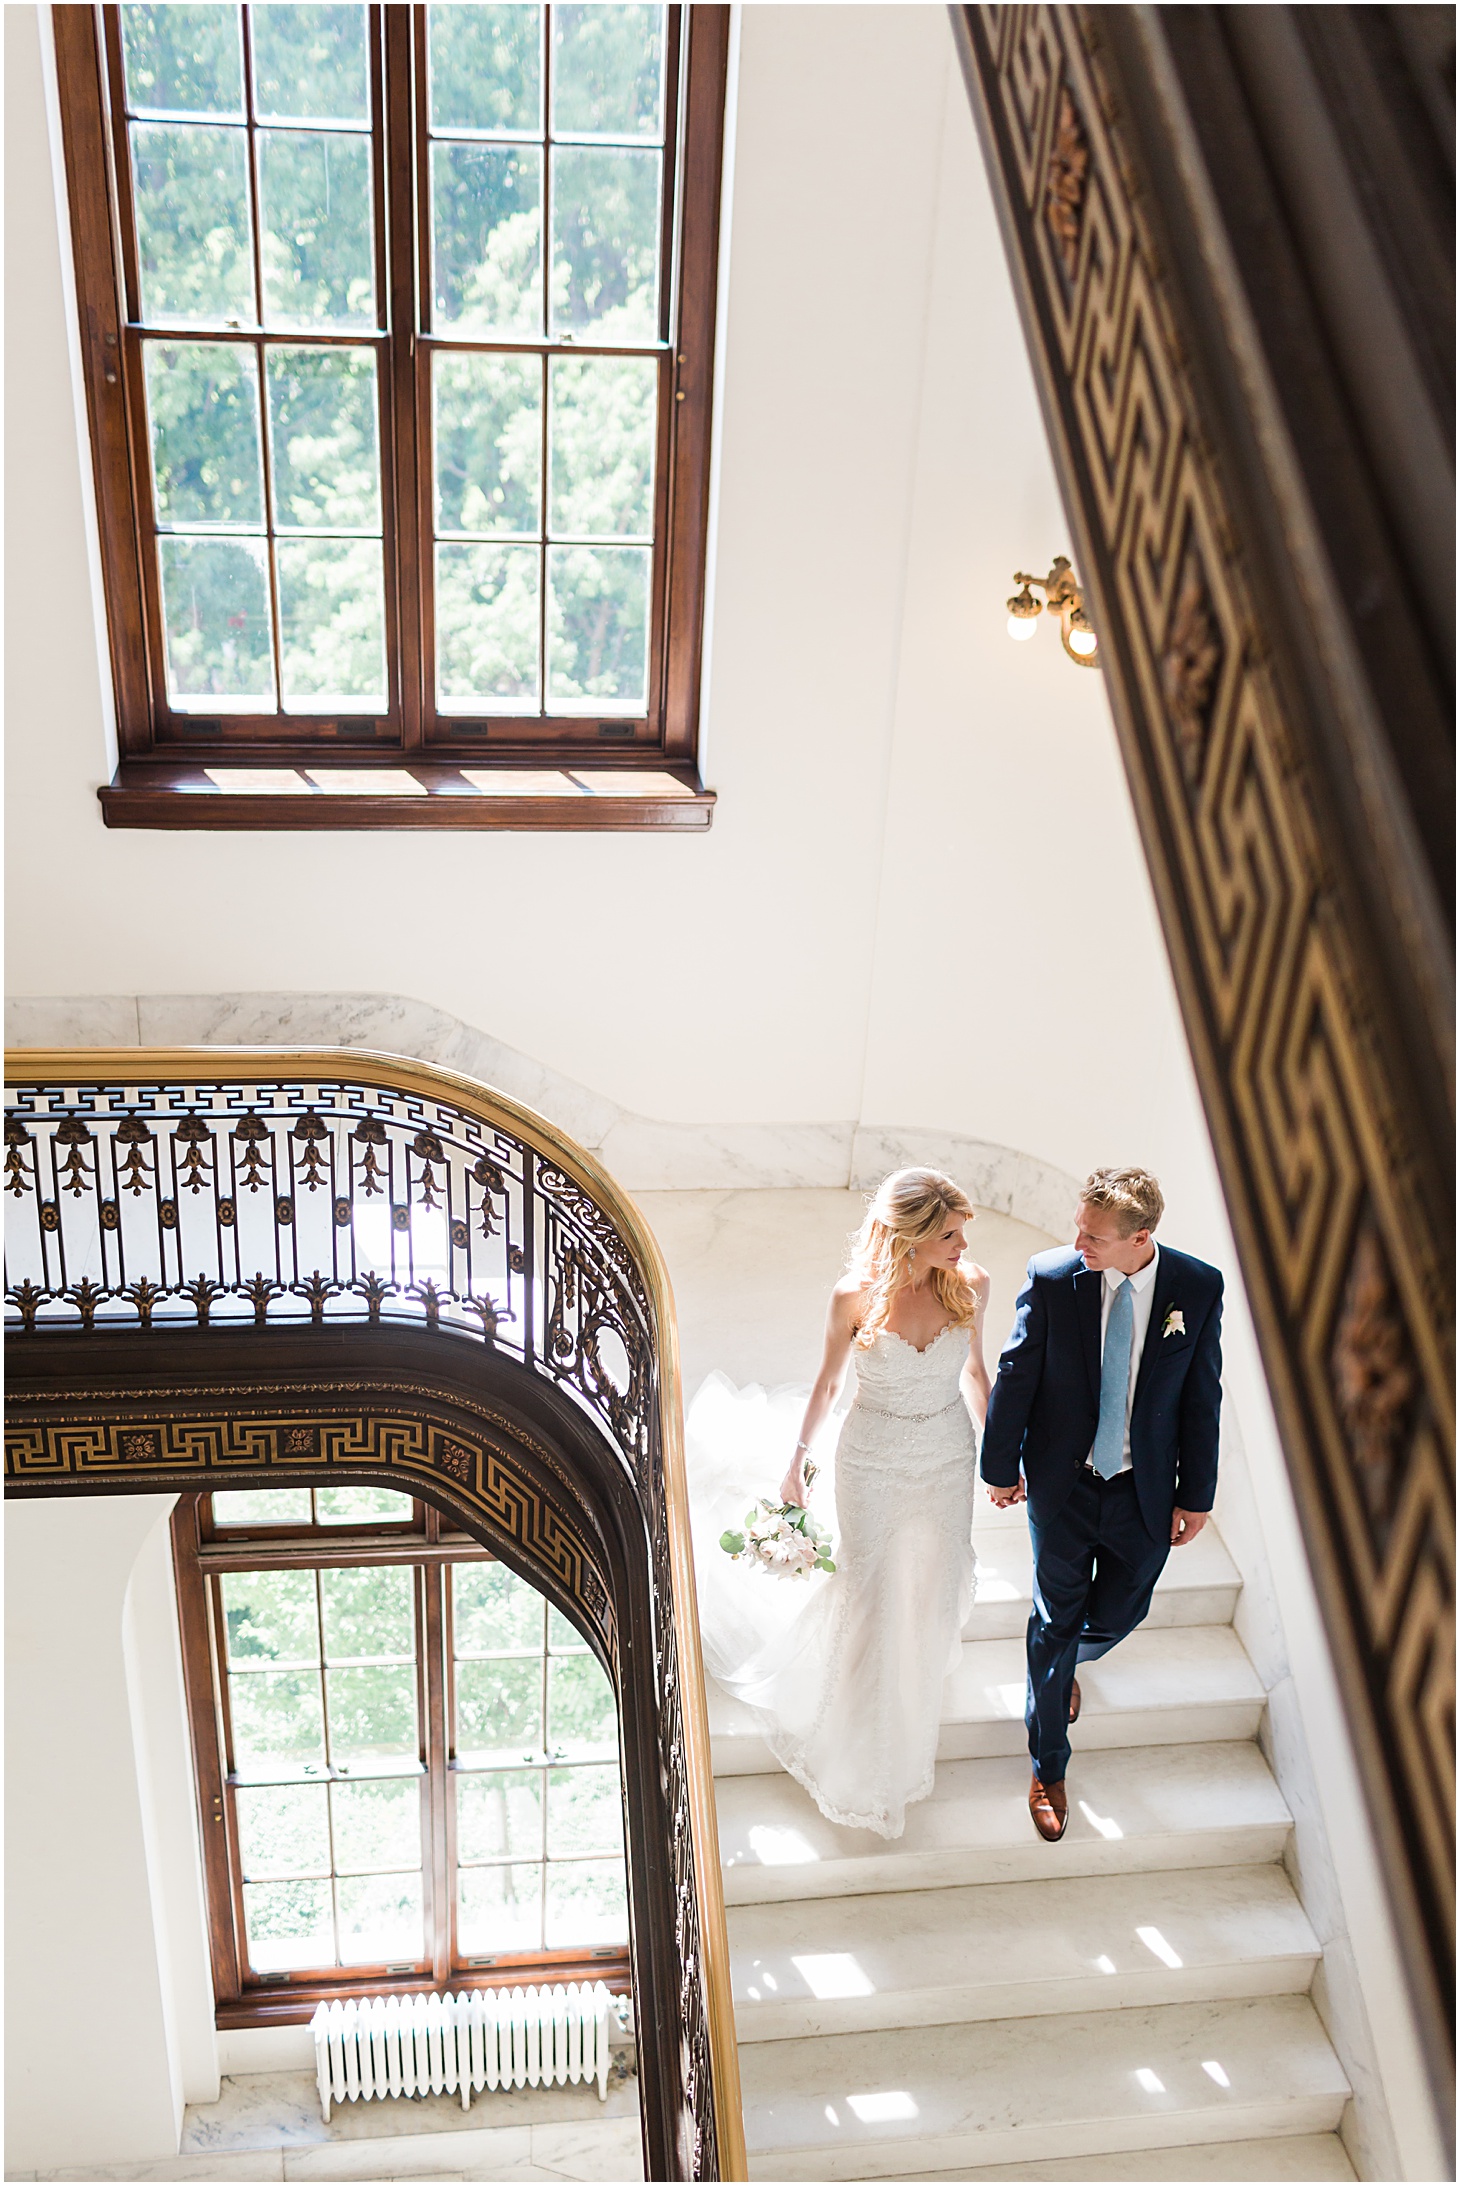 Russell Senate Office Building | Top Washington DC wedding photographer Sarah Bradshaw